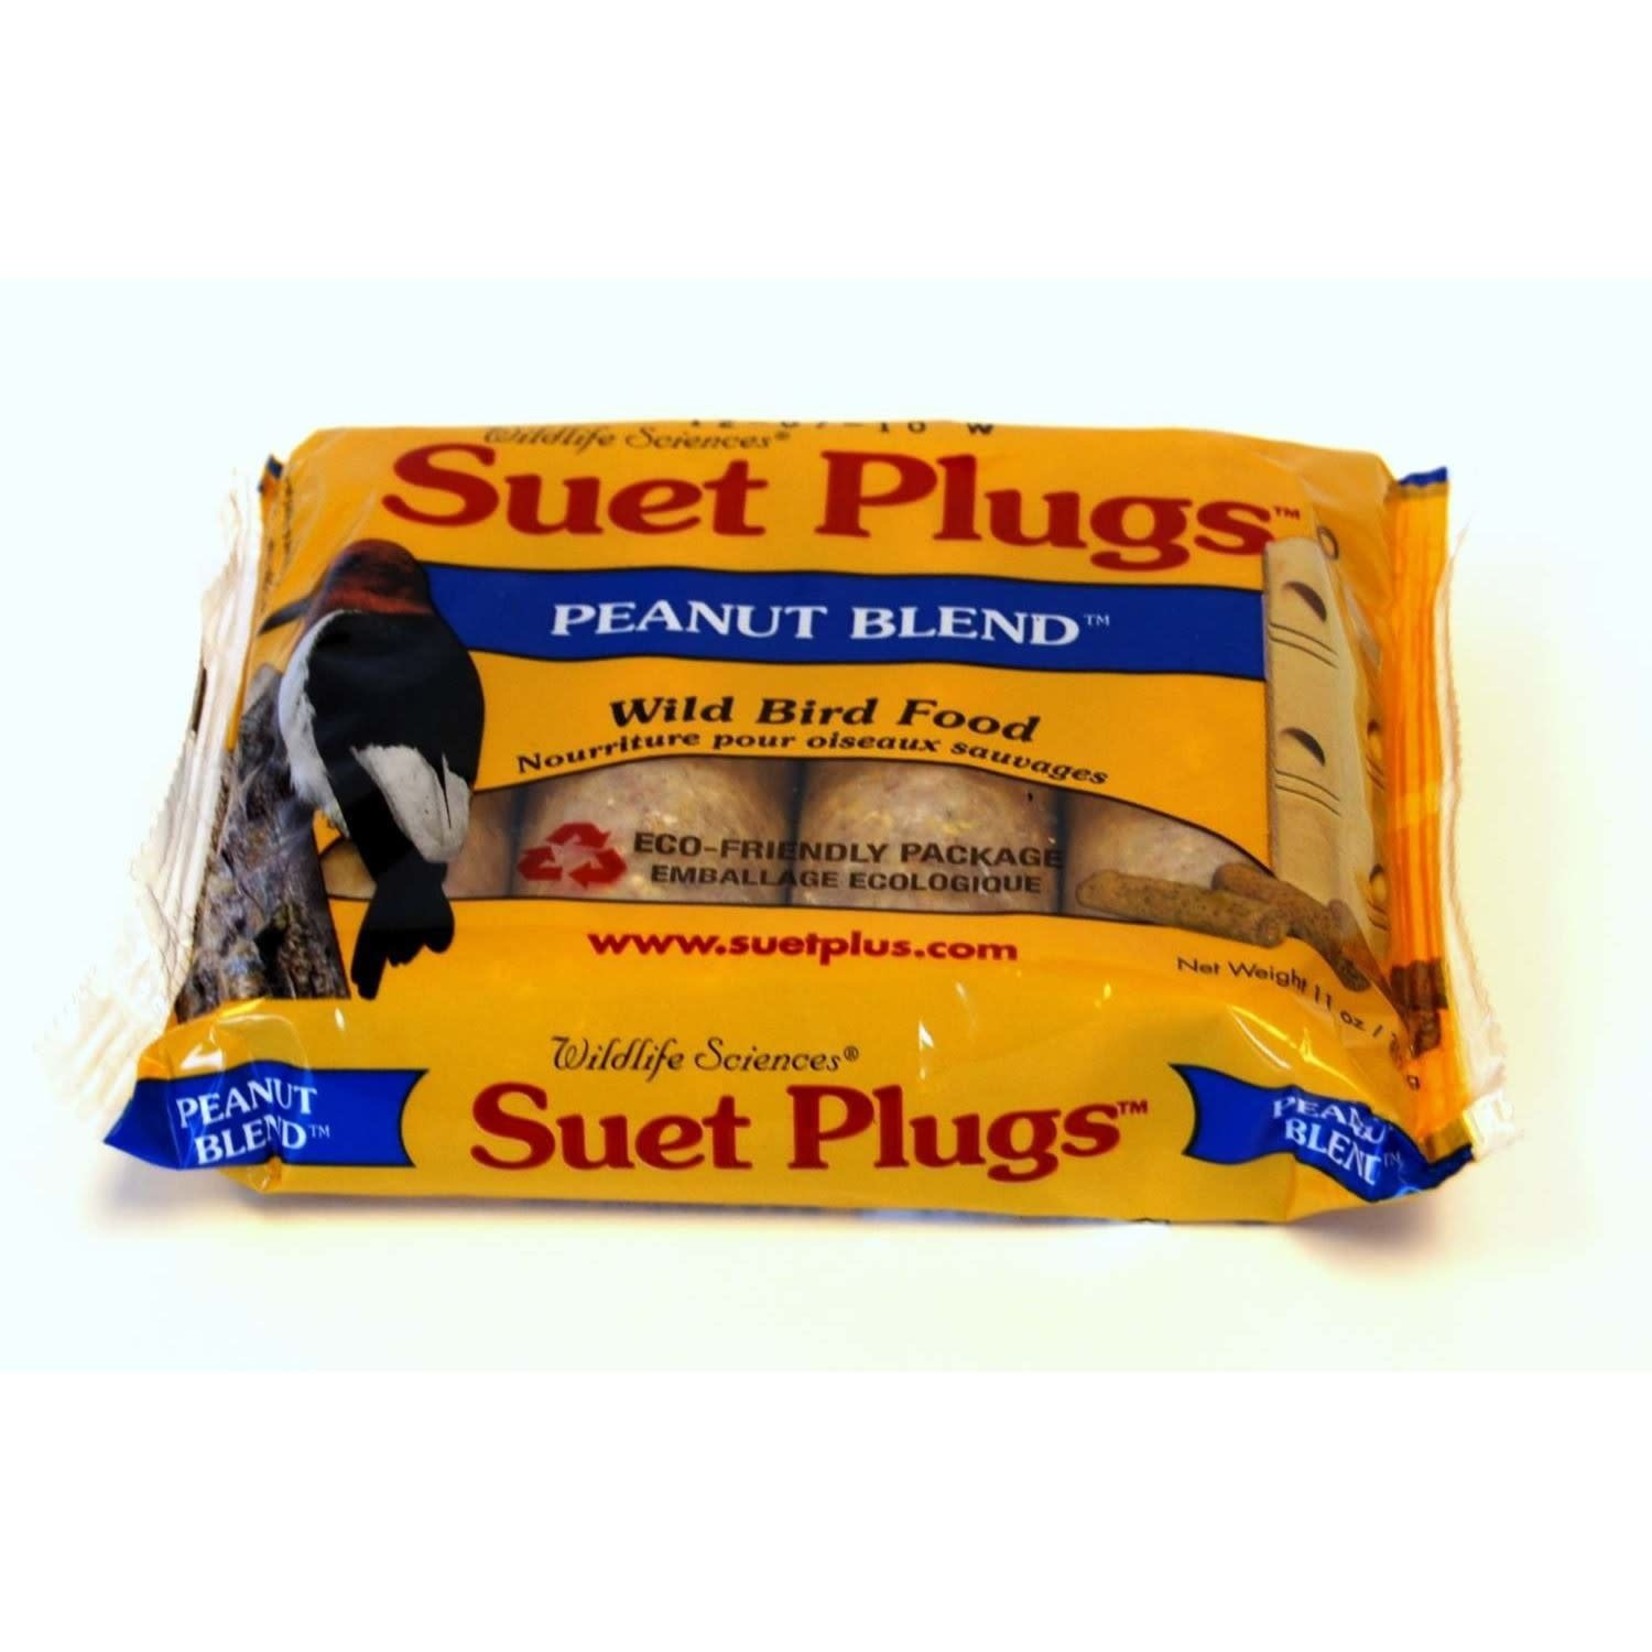 Suet Plugs - Peanut Blend